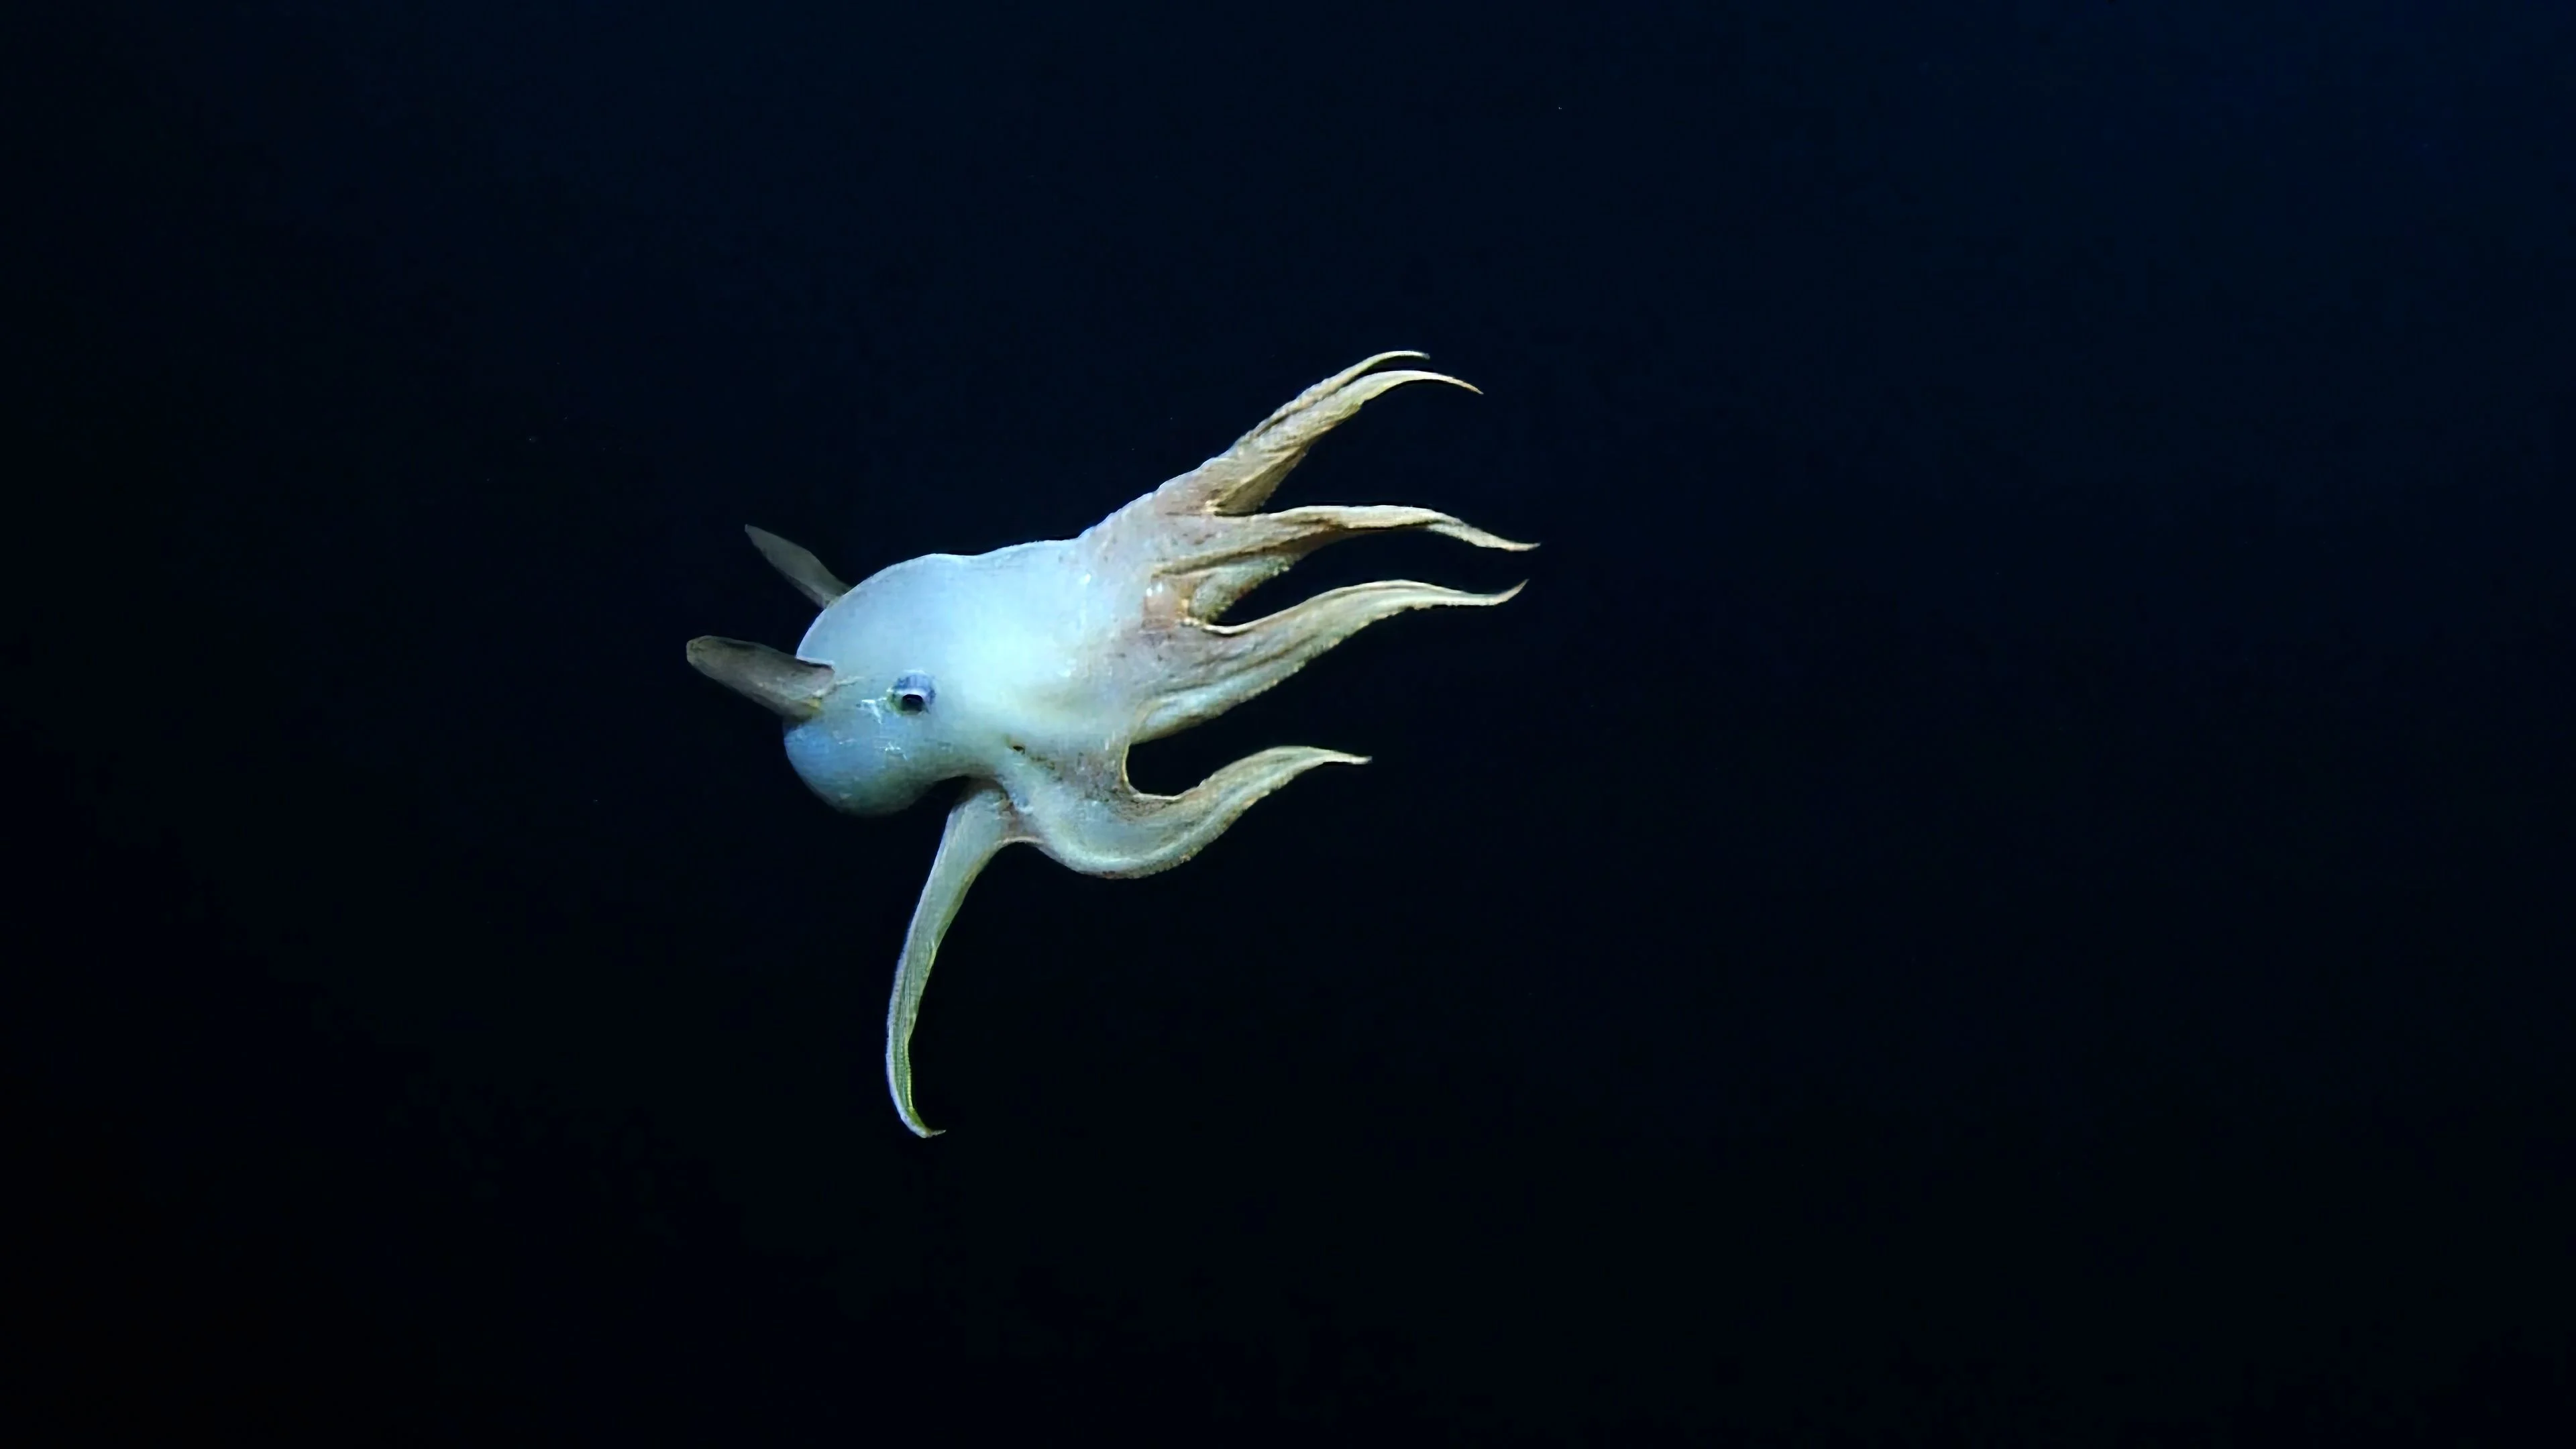 Rare dumbo octopus caught on camera